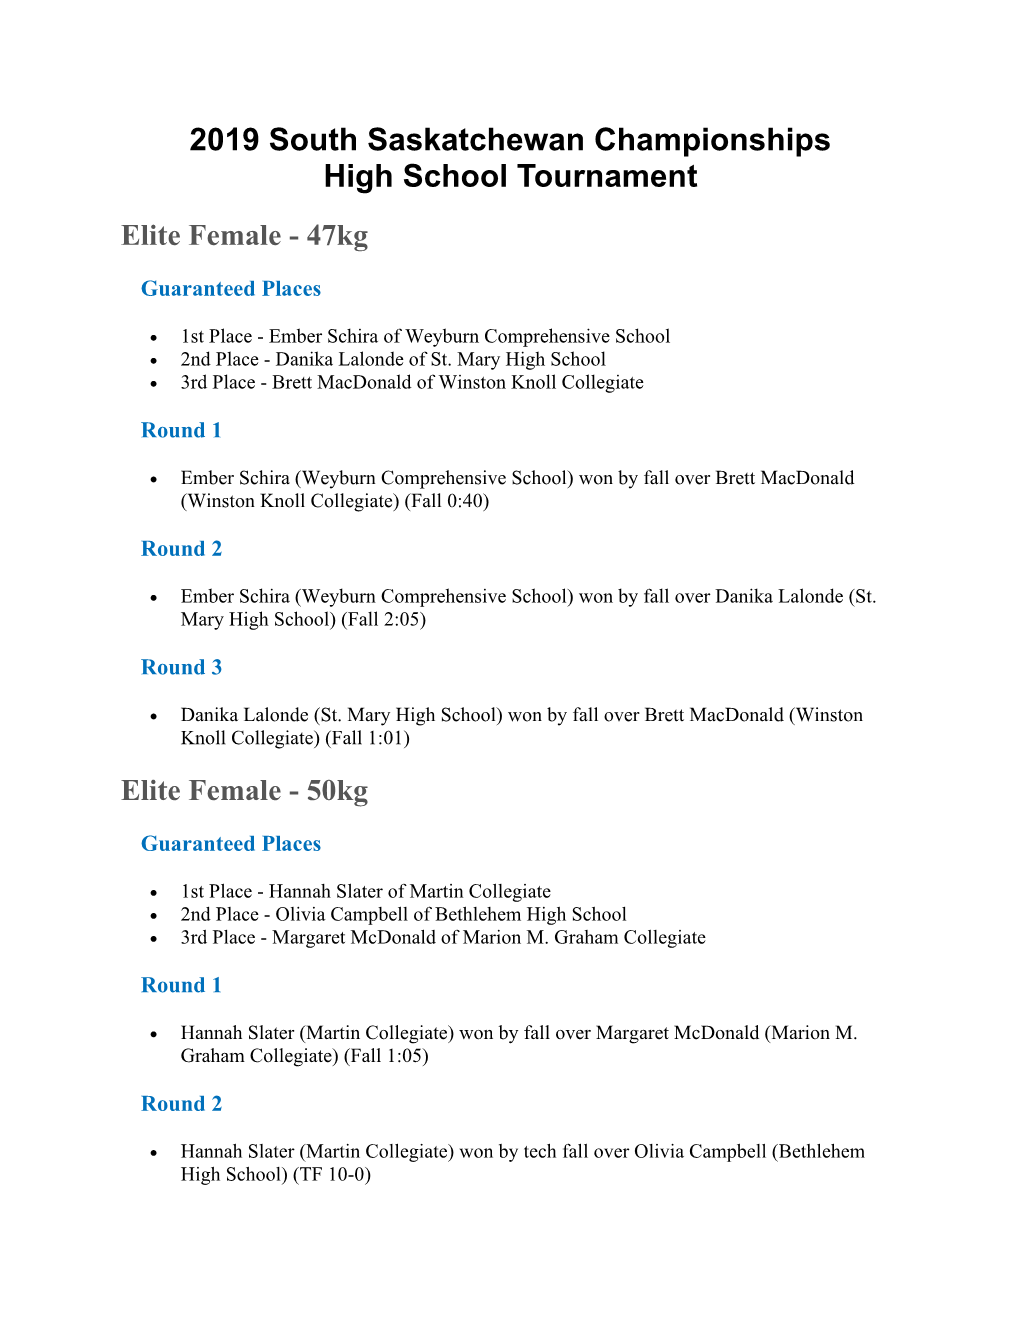 2019 South Saskatchewan Championships High School Tournament Elite Female - 47Kg